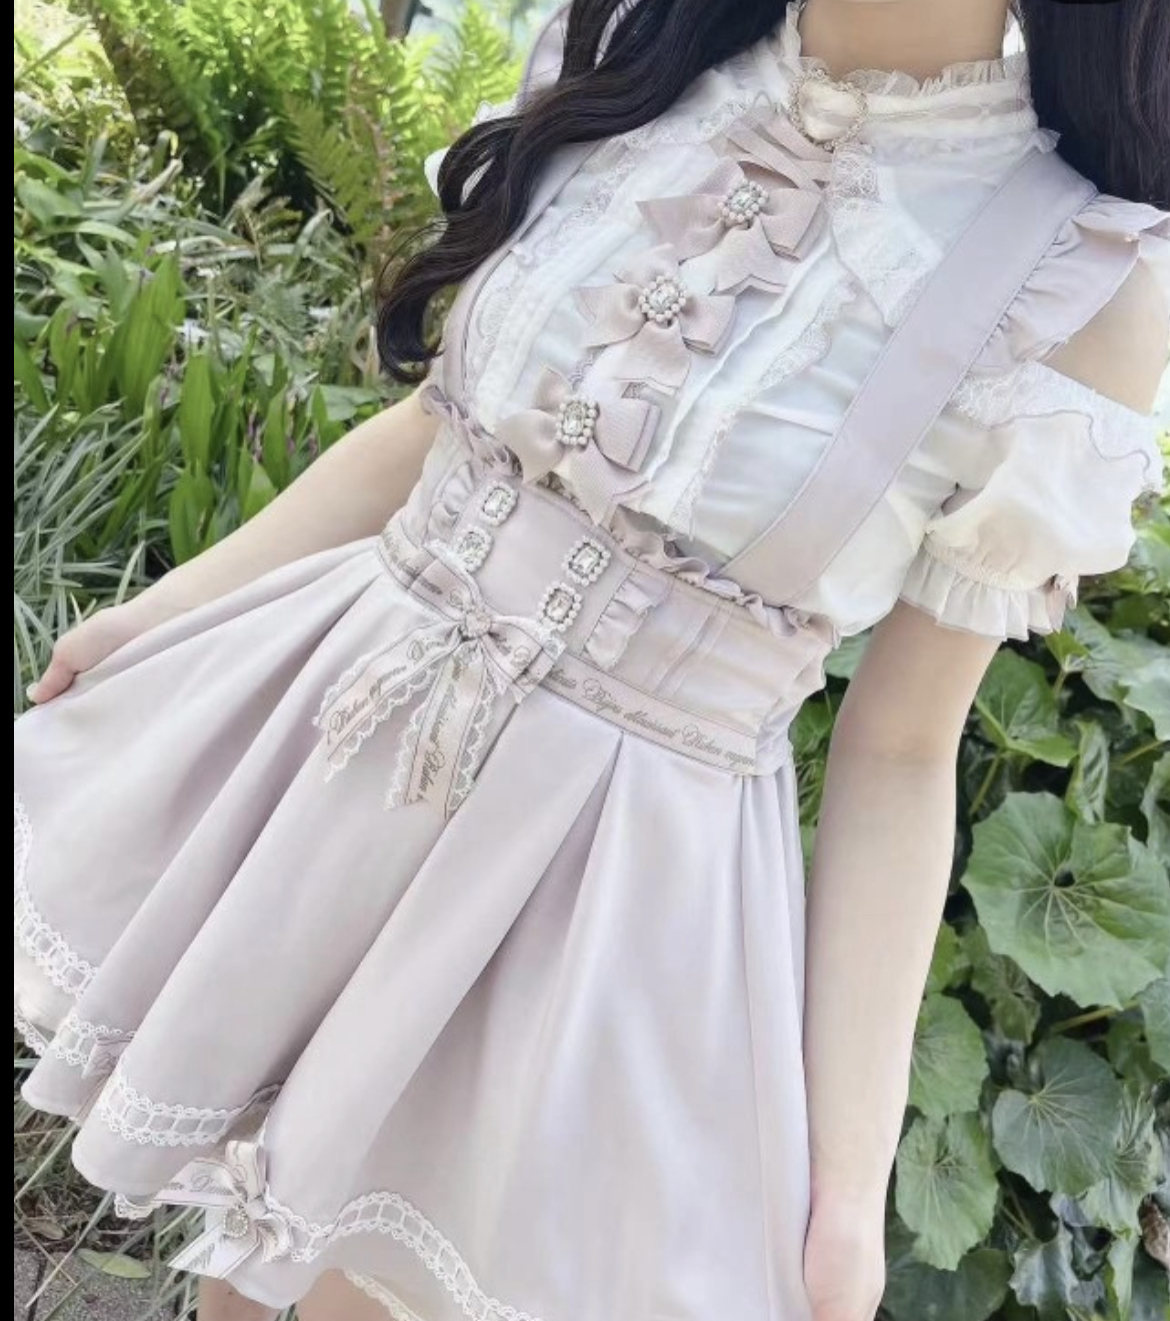 LIZ LISA 日系地雷系量產型露肩上衣 三色 甜美可愛蕾絲鈎花愛心蝴蝶結 分碼 襯衣